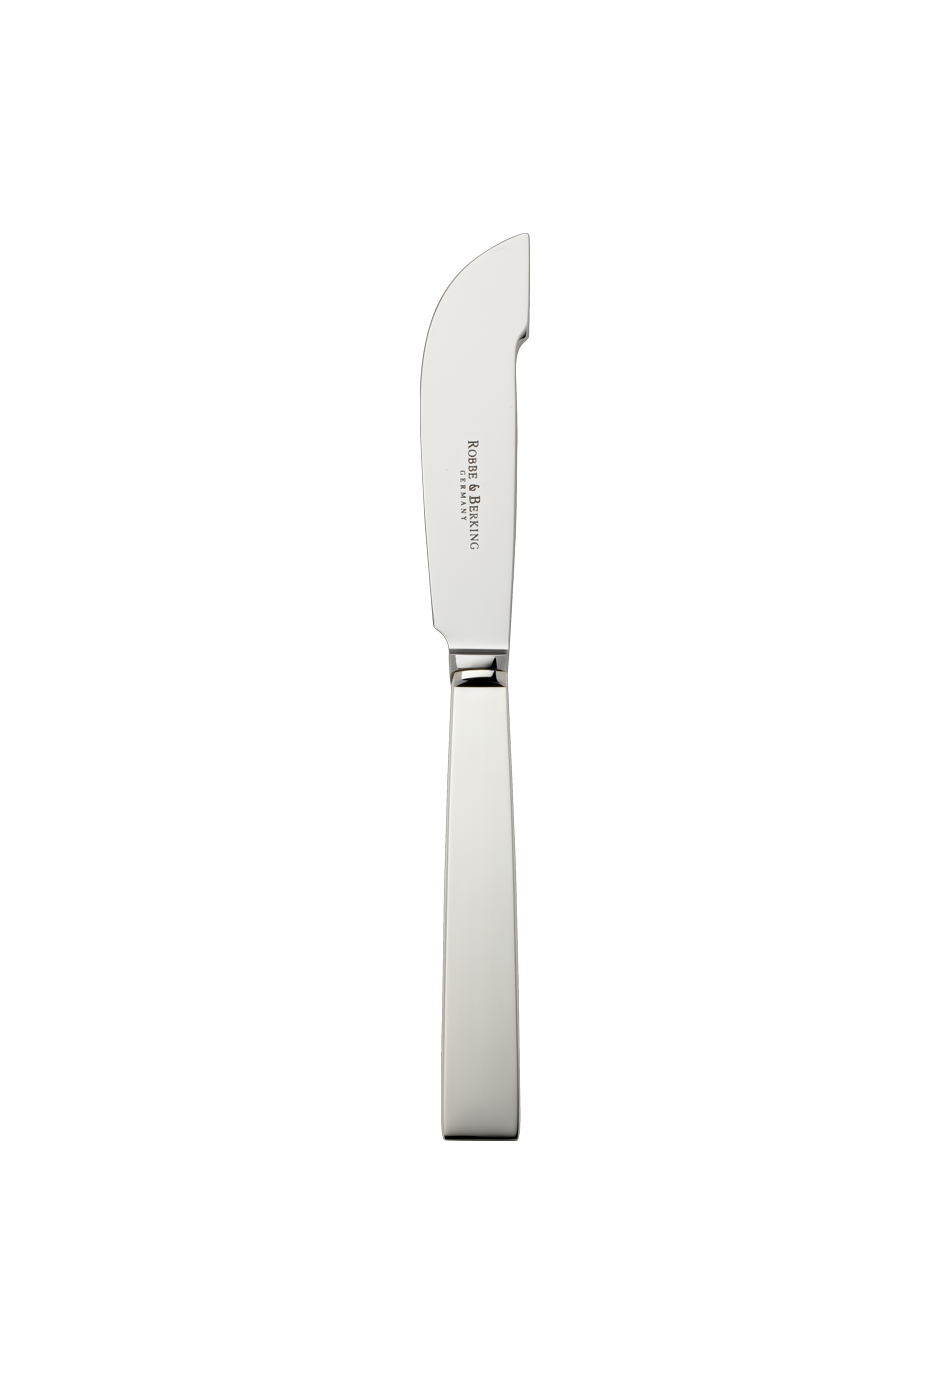 Riva Cheese Knife (150g massive silverplated)